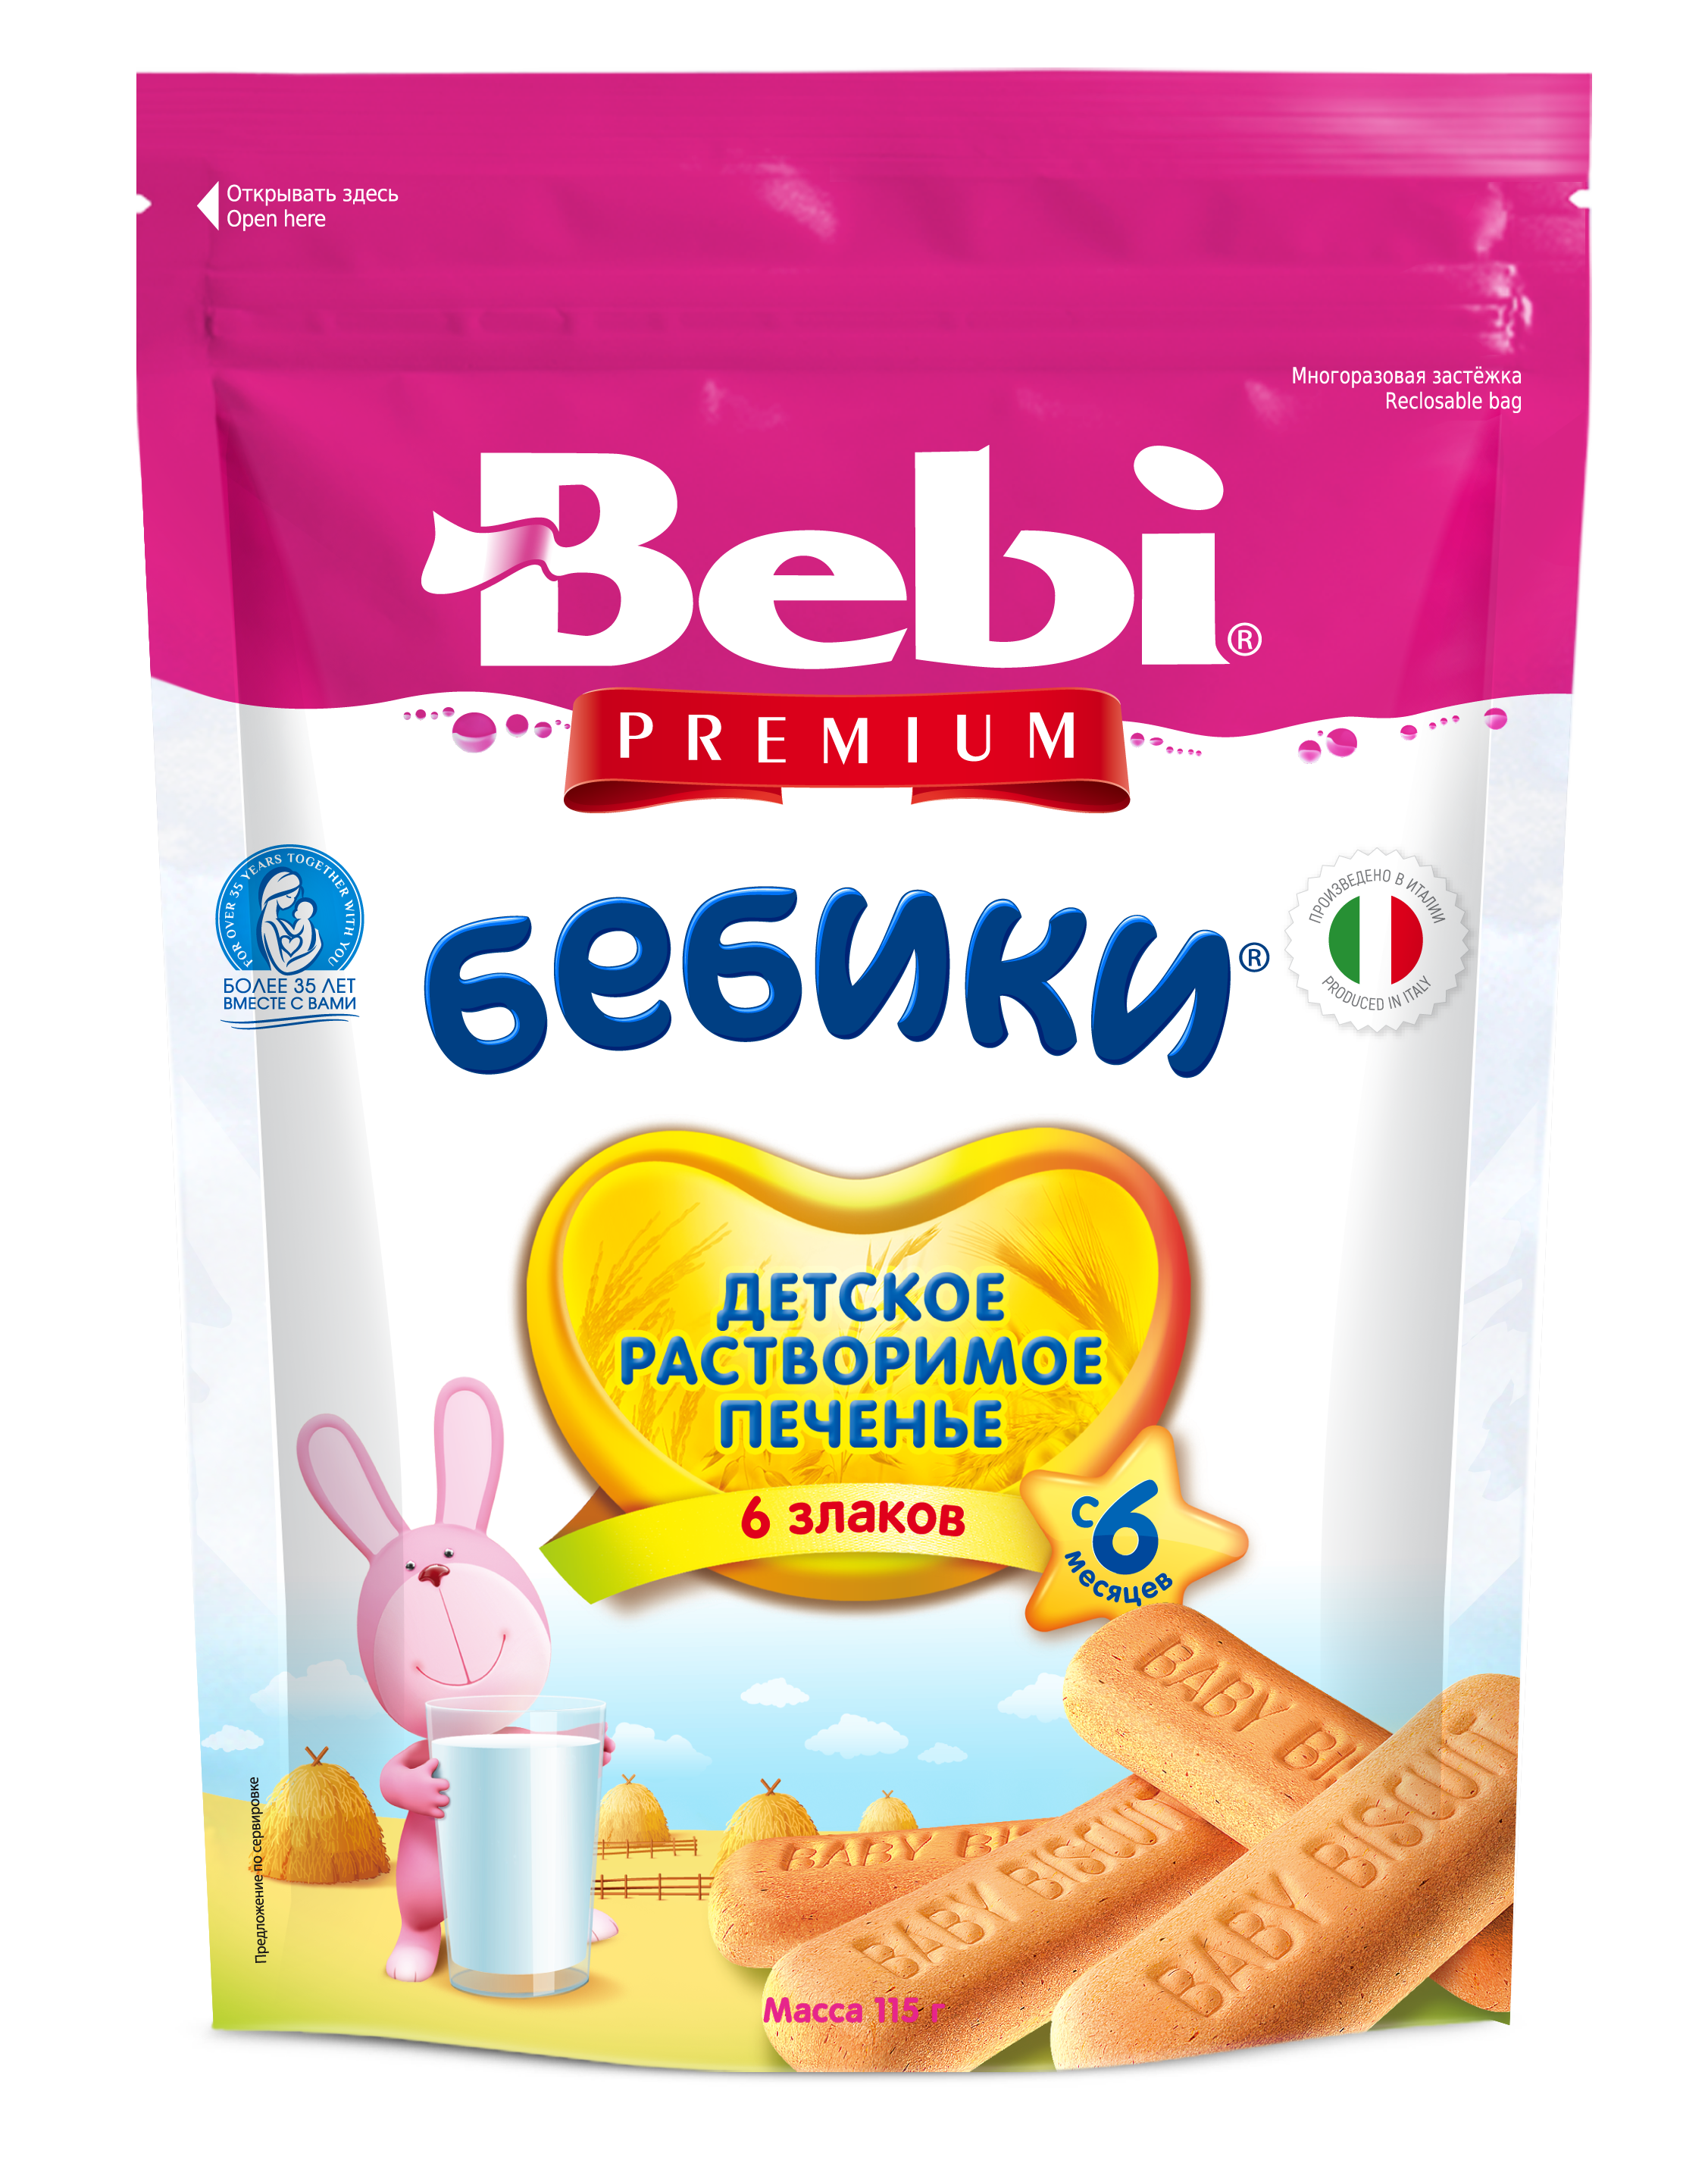 Печенье Bebi Premium Бебики 6 злаков, 115 г - фото 1